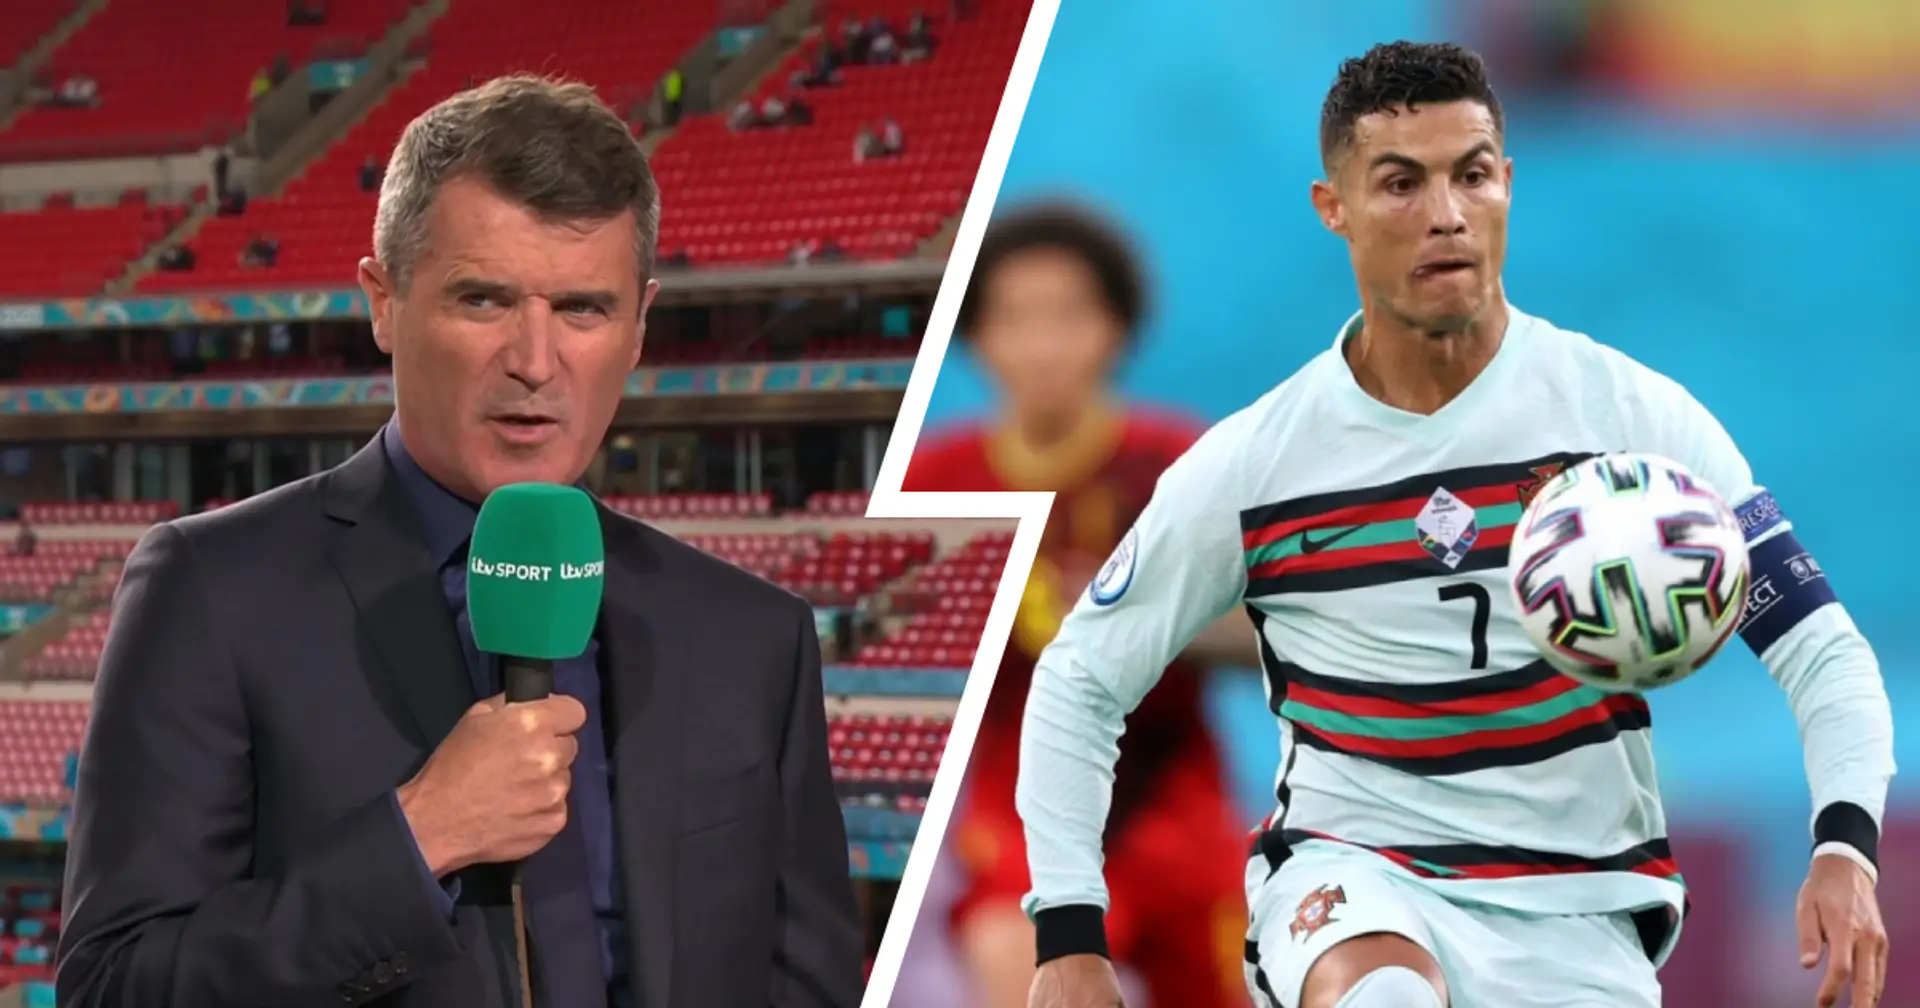 'The most intelligent player I've seen in my life': Keane praises Ronaldo despite Euro 2020 exit